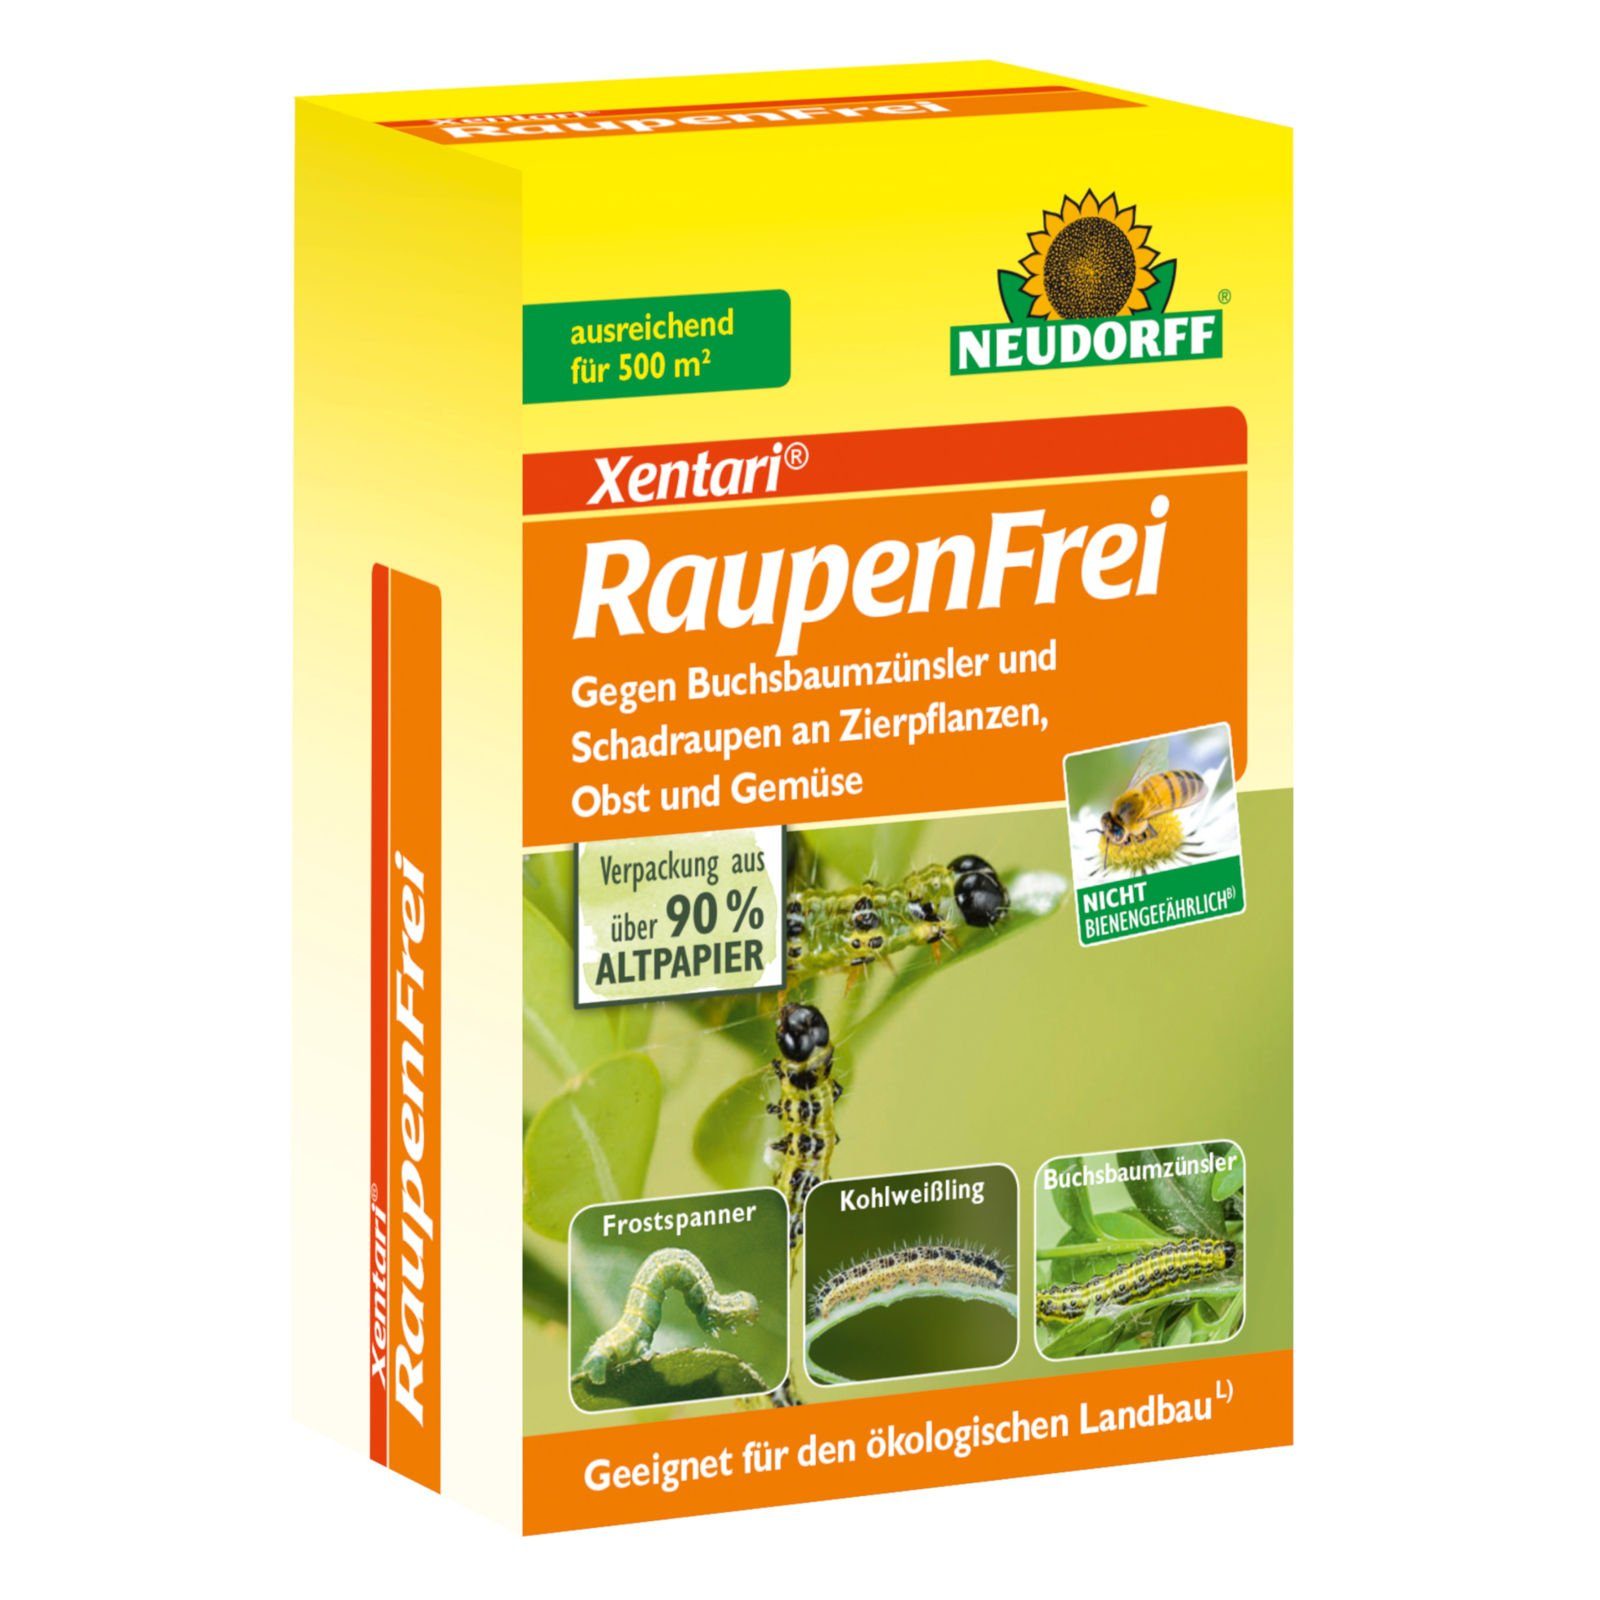 Neudorff Insektenvernichtungsmittel Raupenfrei XenTari g - 25 2x